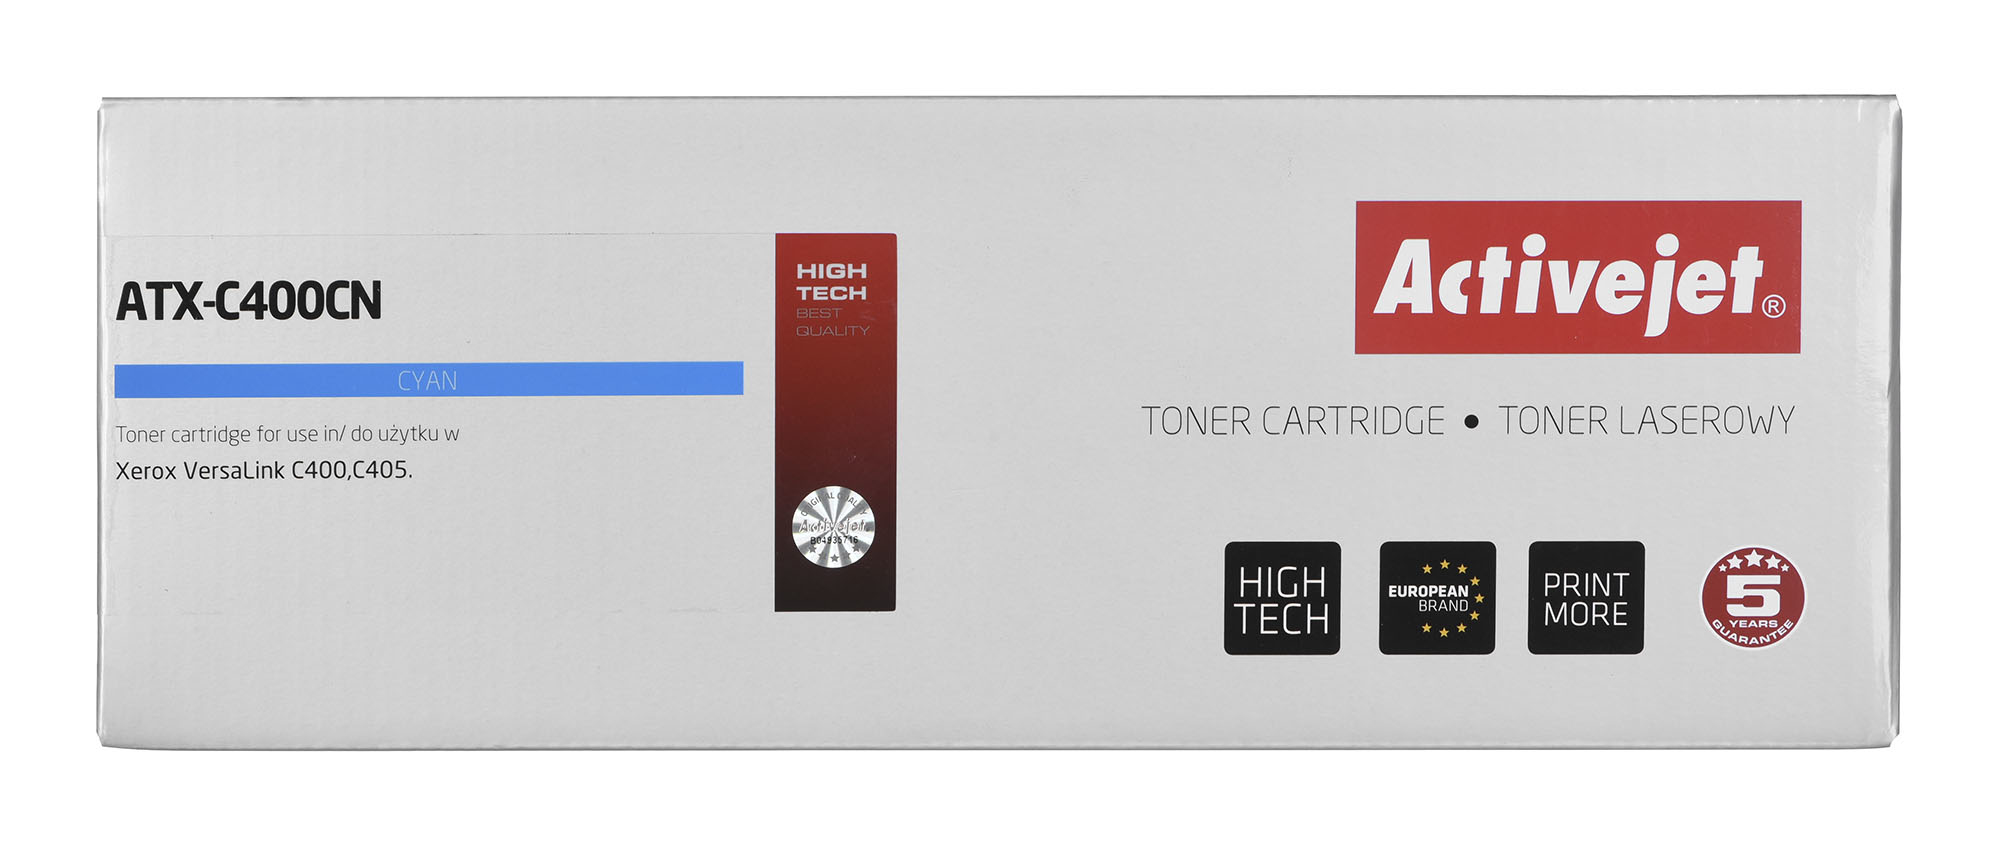 Toner Activejet ATX-C400CN do drukarki Xerox, zamiennik Xerox 106R03510; Supreme; 2500 stron; błękitny.